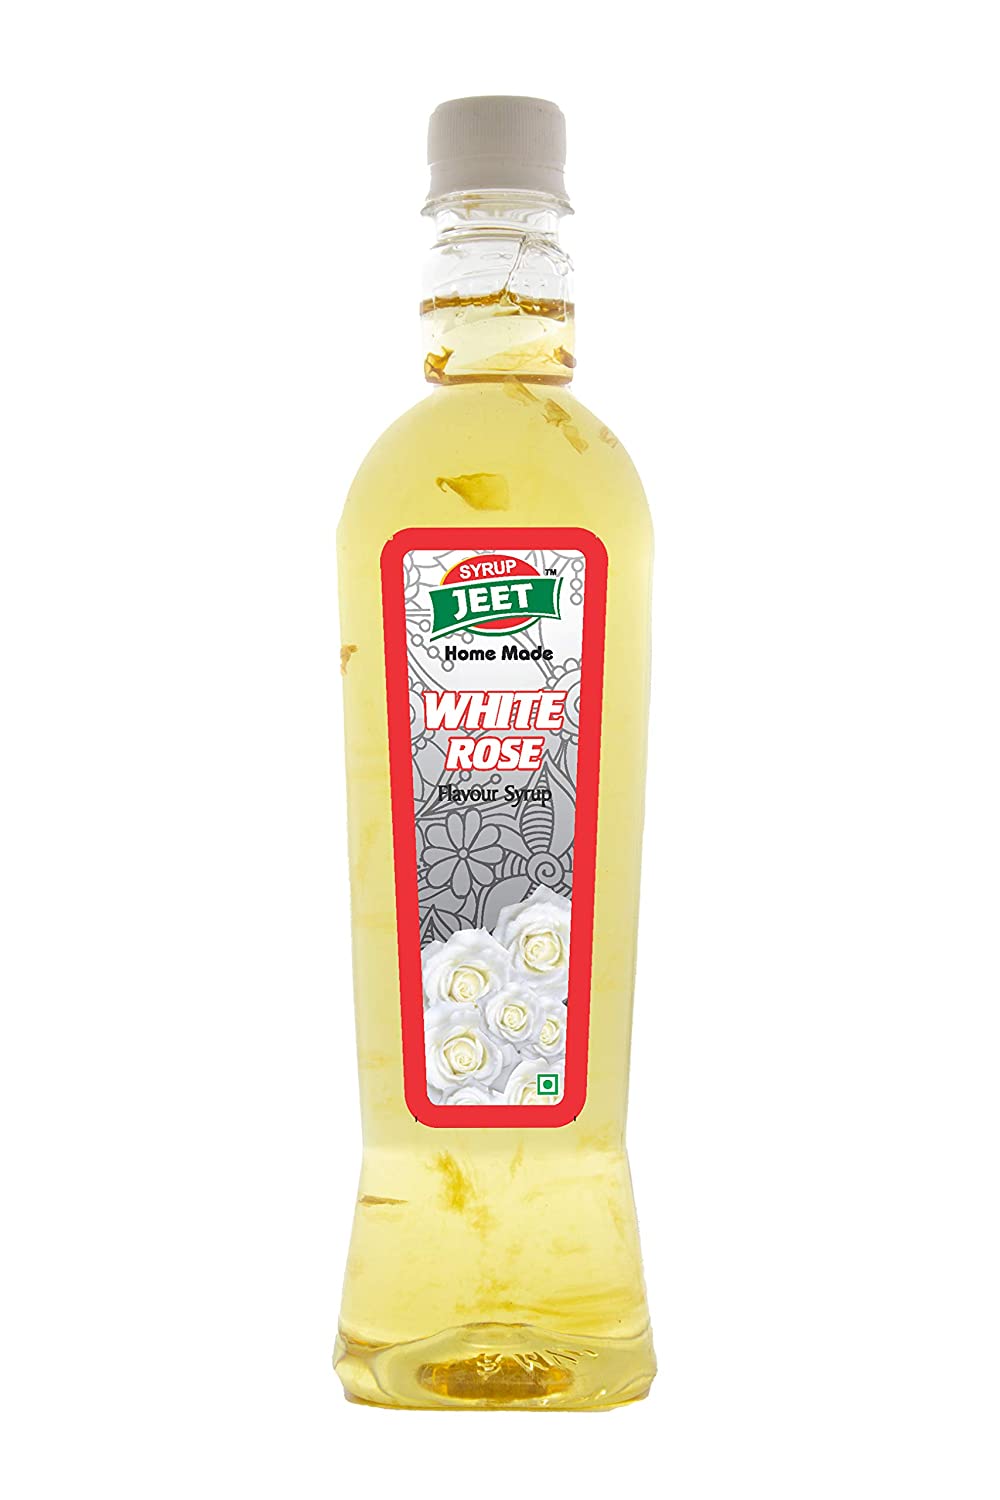 JEET White Rose Syrup Image